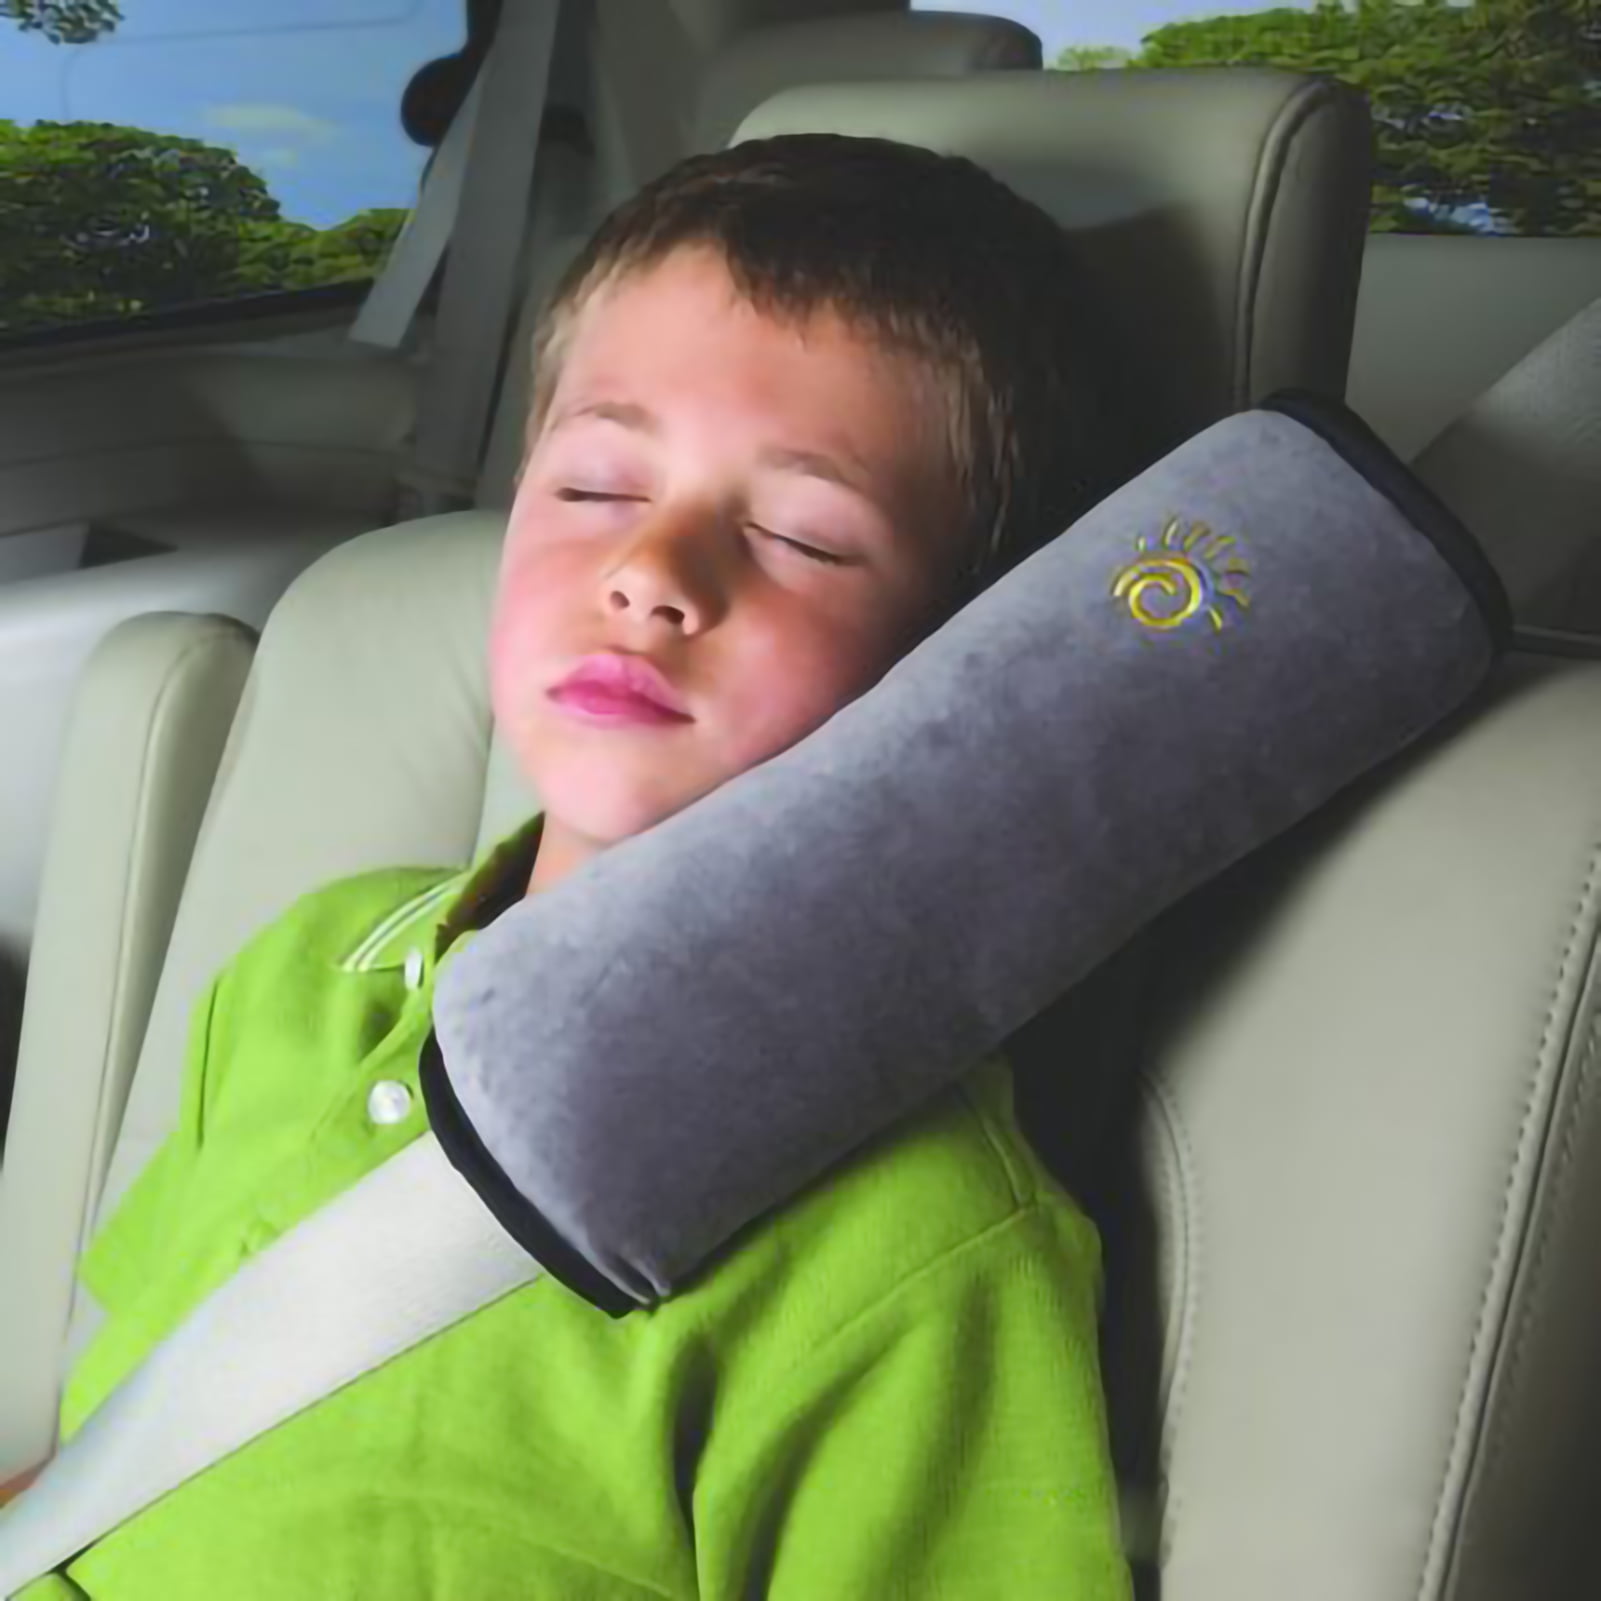 Kids Car Seat Travel Neck Pillow Soft Neck Support Cushion Car Seat Belt  Cover Cushion Pillow